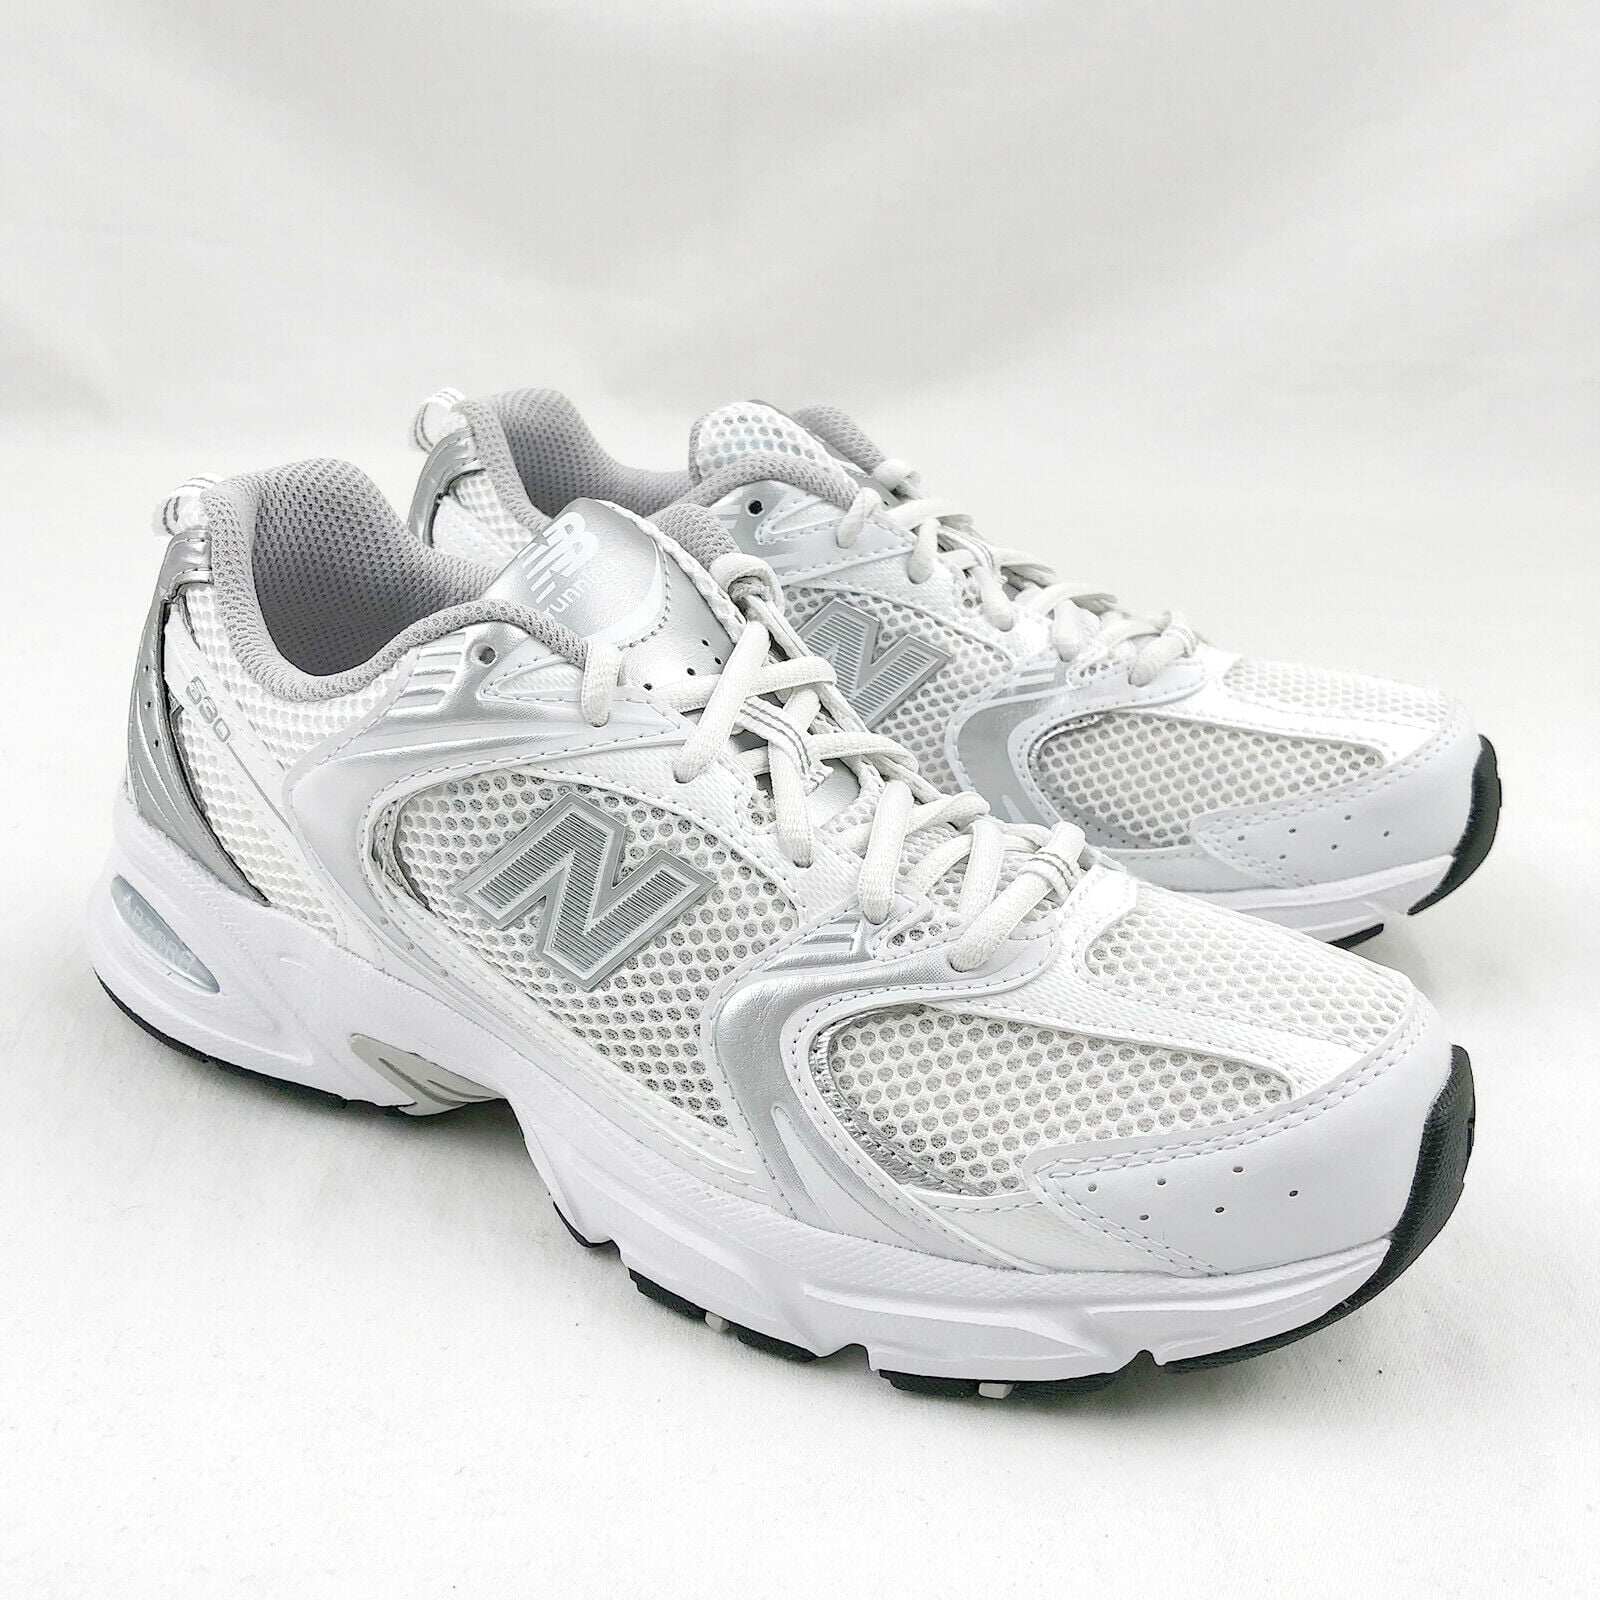 New Balance - New Balance 530 Retro White Silver Running Shoes Men's Sneakers MR530EMA - Walmart.com